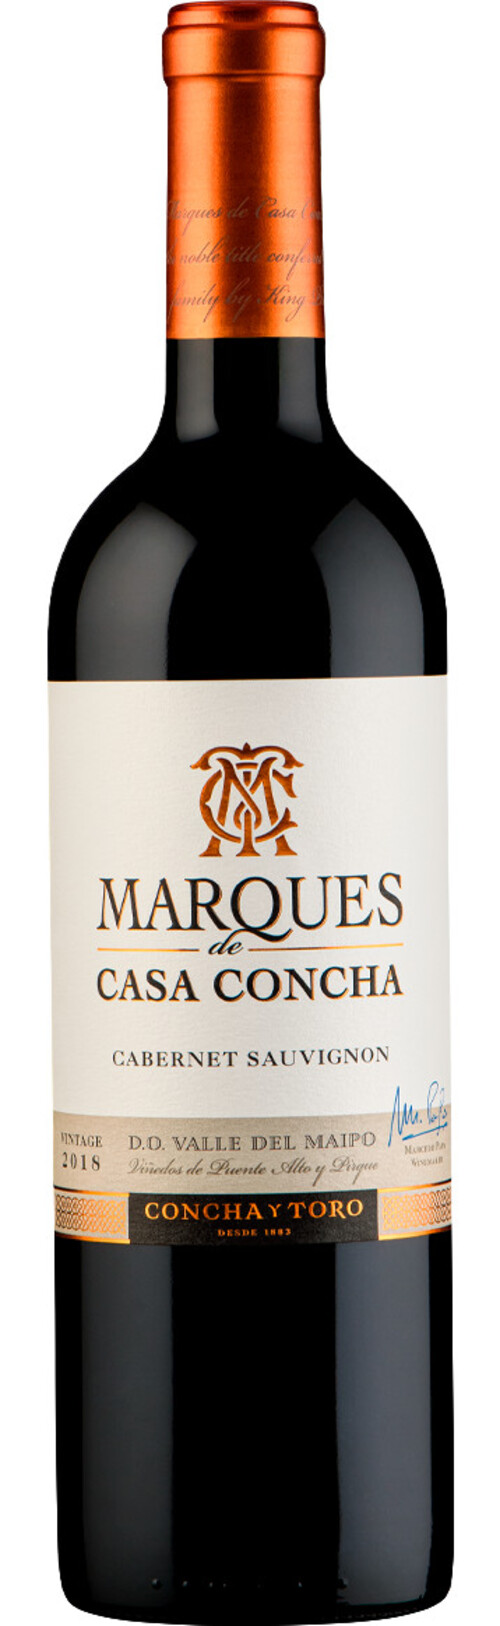 Rượu vang đỏ Chile Marques de Casa Concha Cabernet Sauvignon